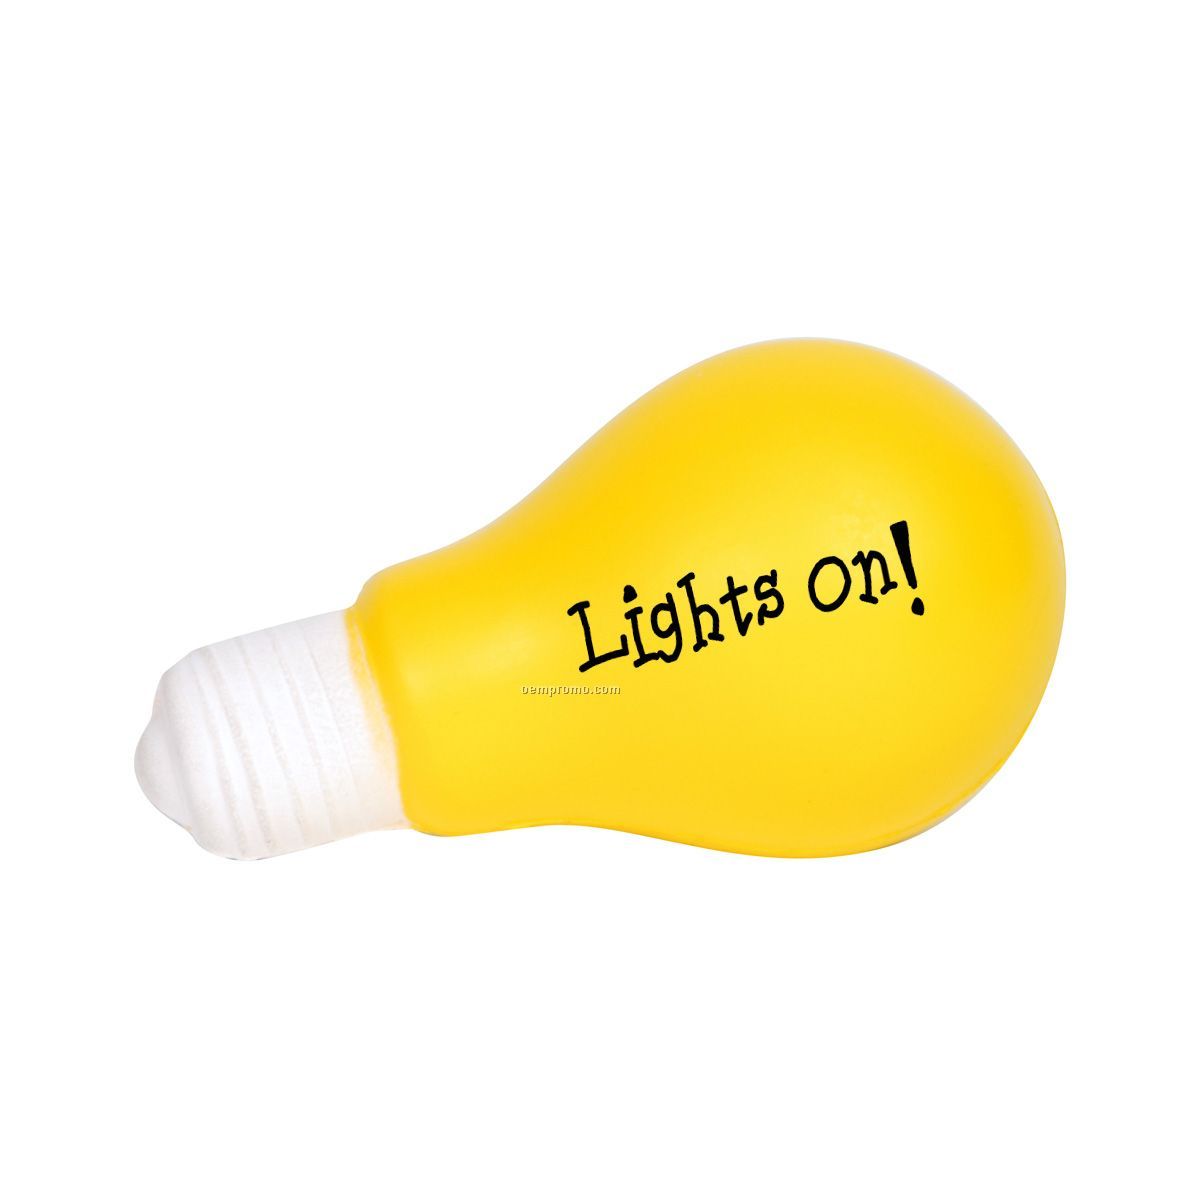 Light Bulb Stress Reliever